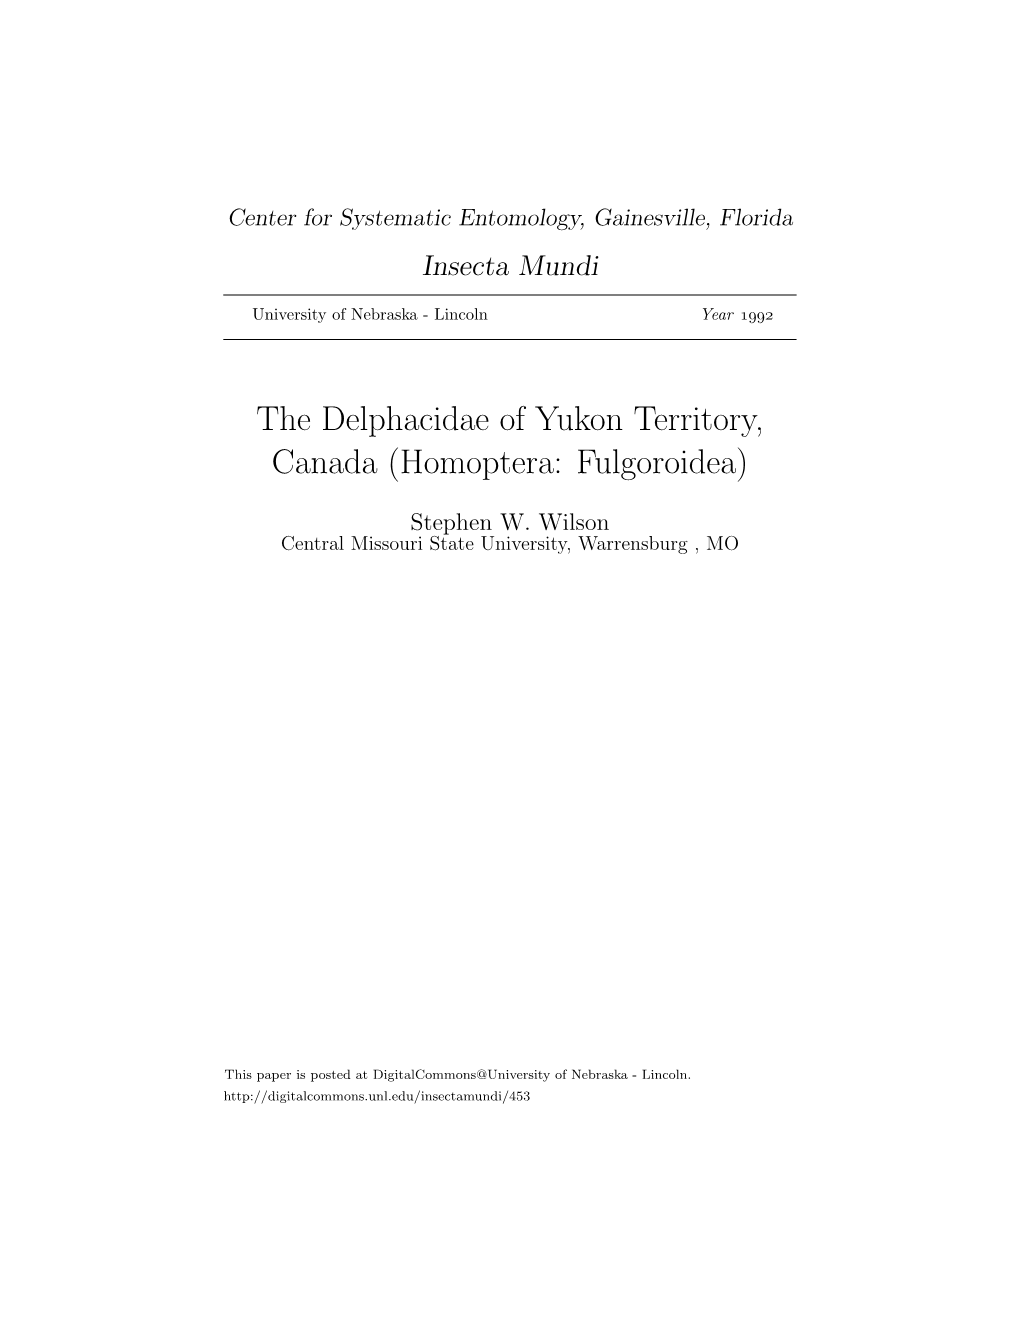 The Delphacidae of Yukon Territory, Canada (Homoptera: Fulgoroidea)